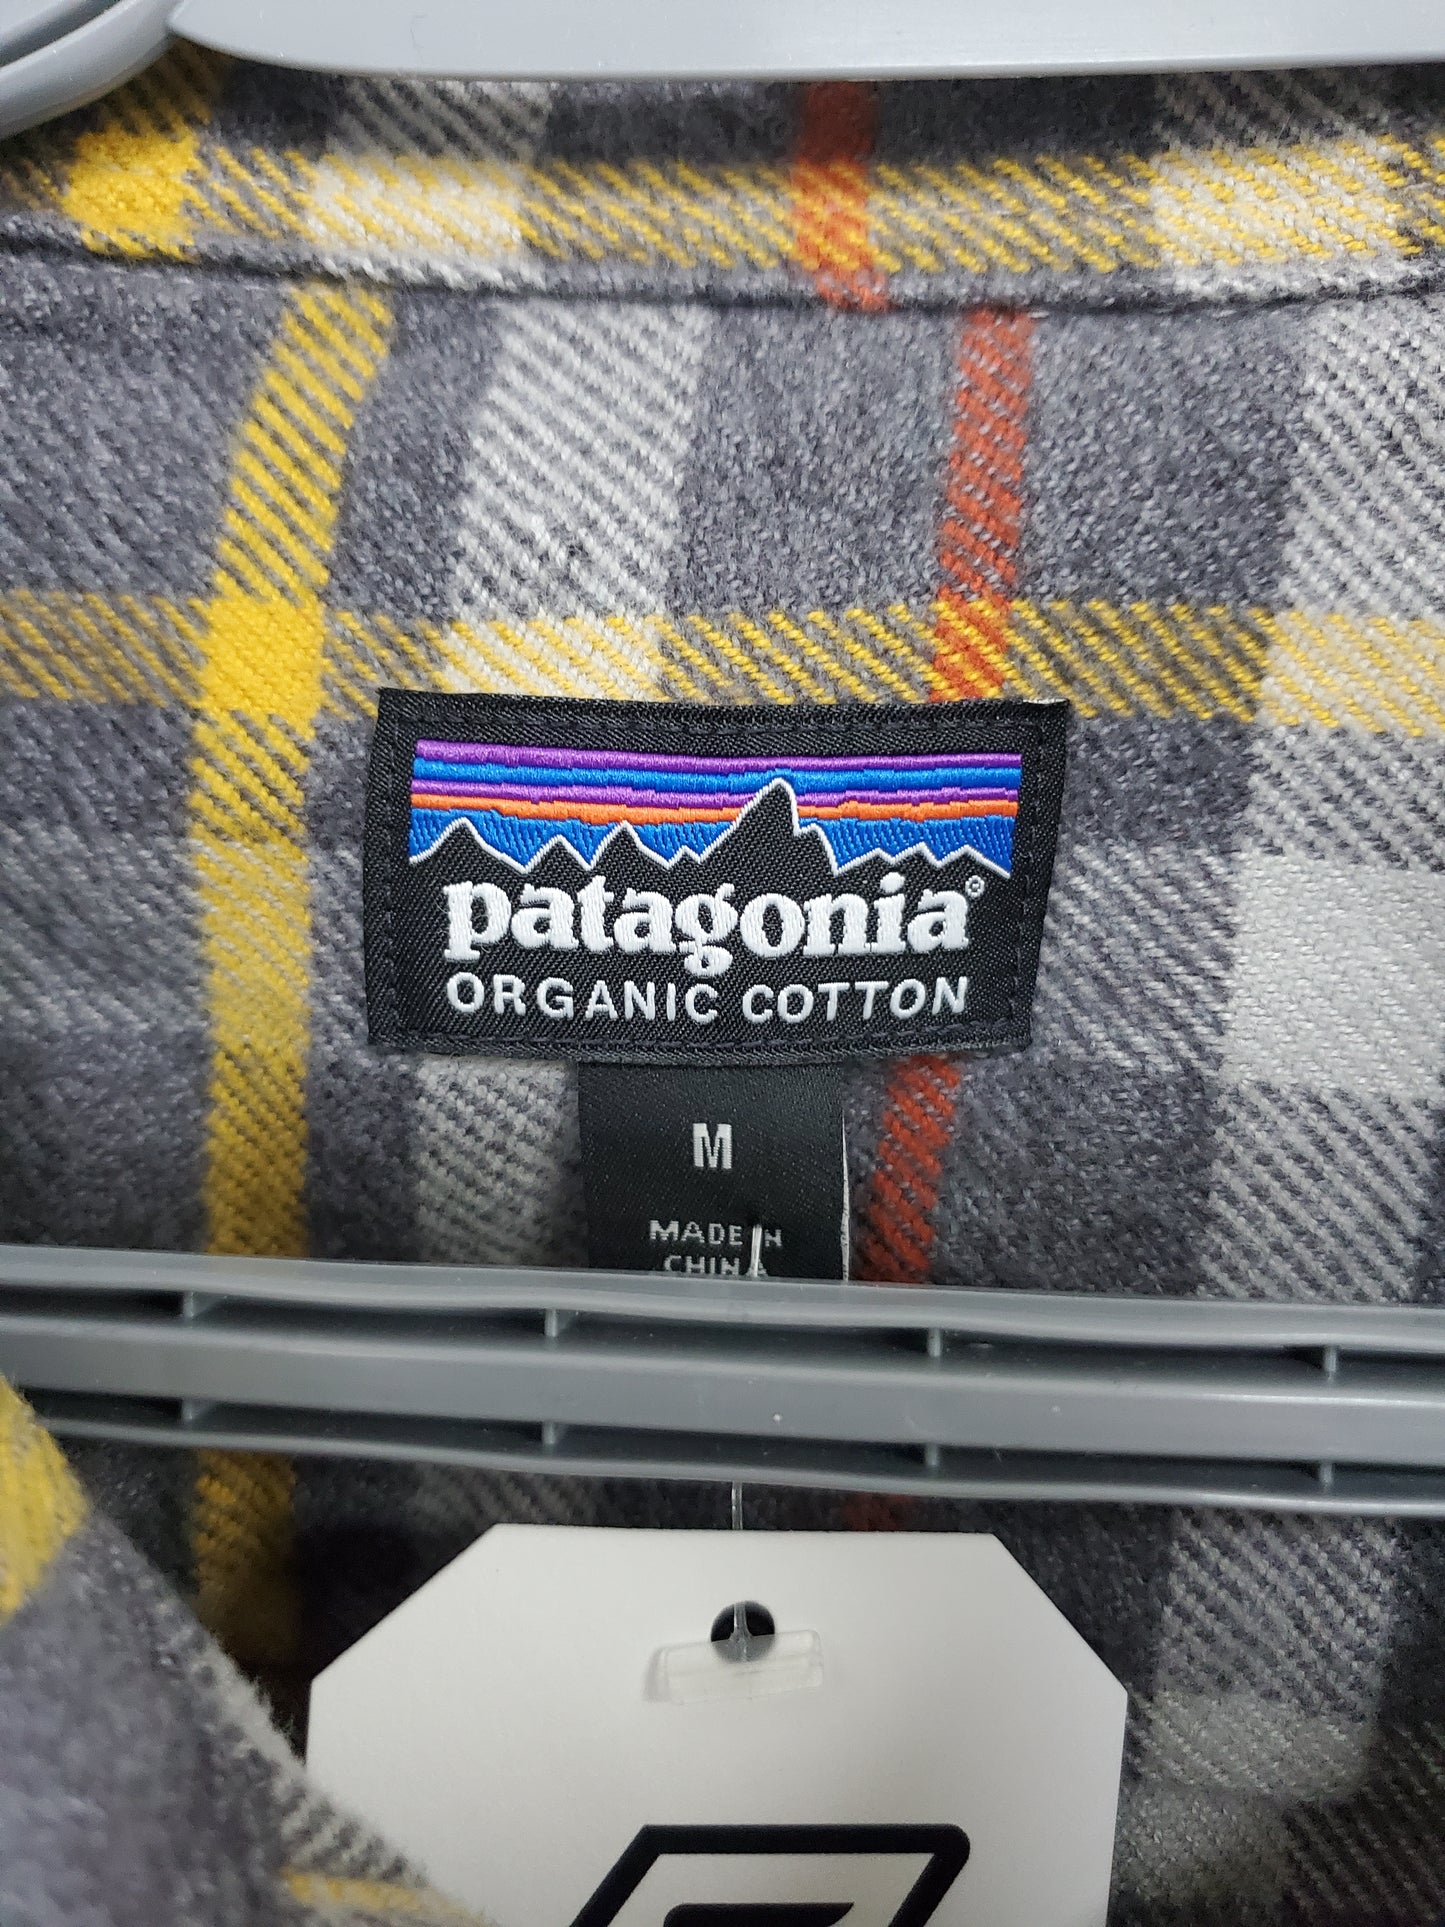 Mens Patagonia Button Up Shirt Size Medium